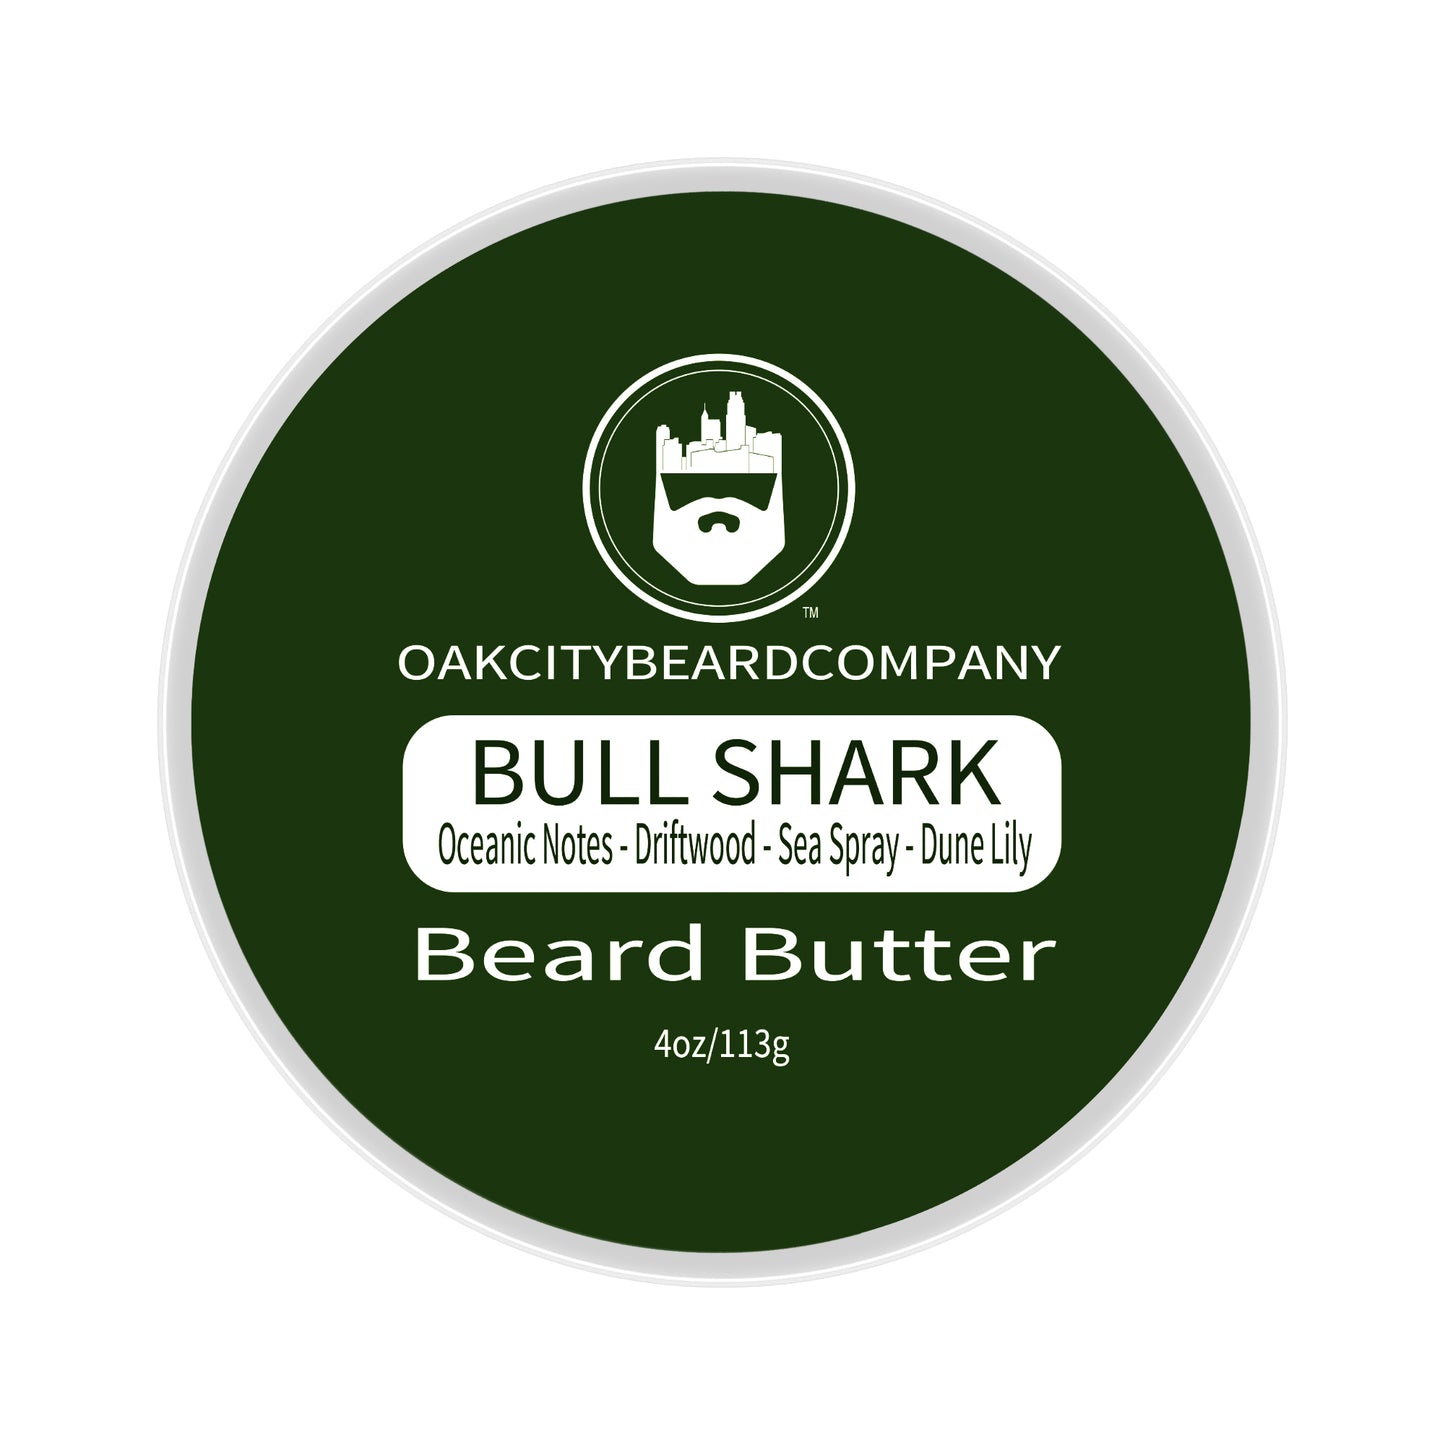 Bull Shark (Beard Butter) by Oak City Beard Company